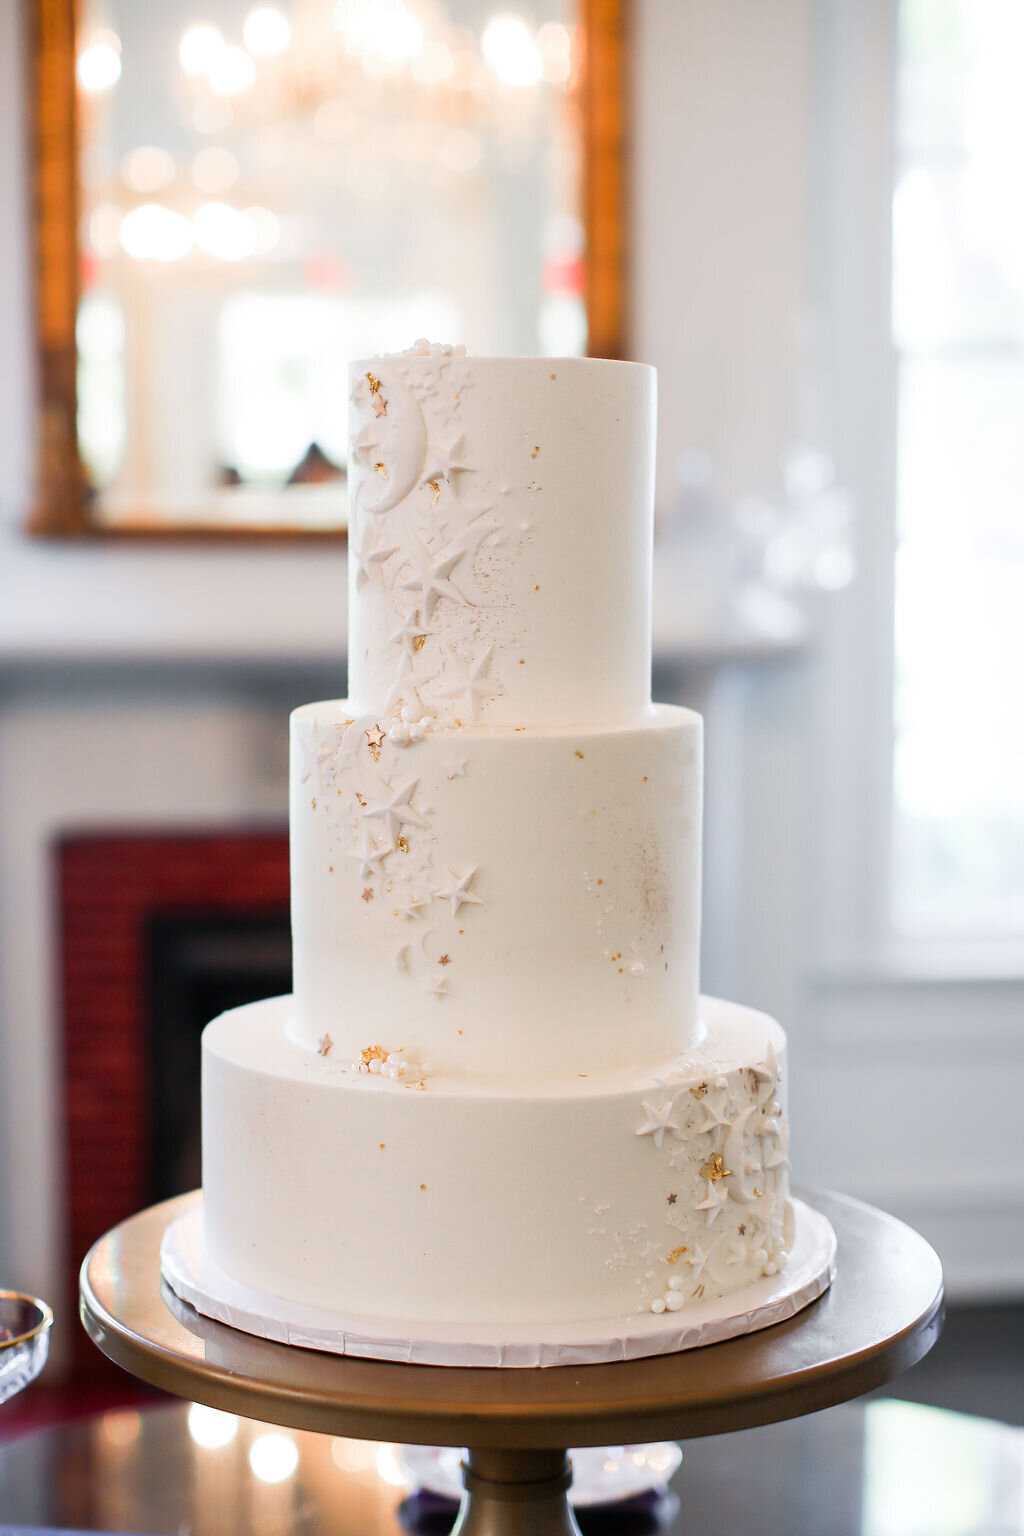 woodbine-mansion-texas-wedding-cake-2-sarah-block-photography